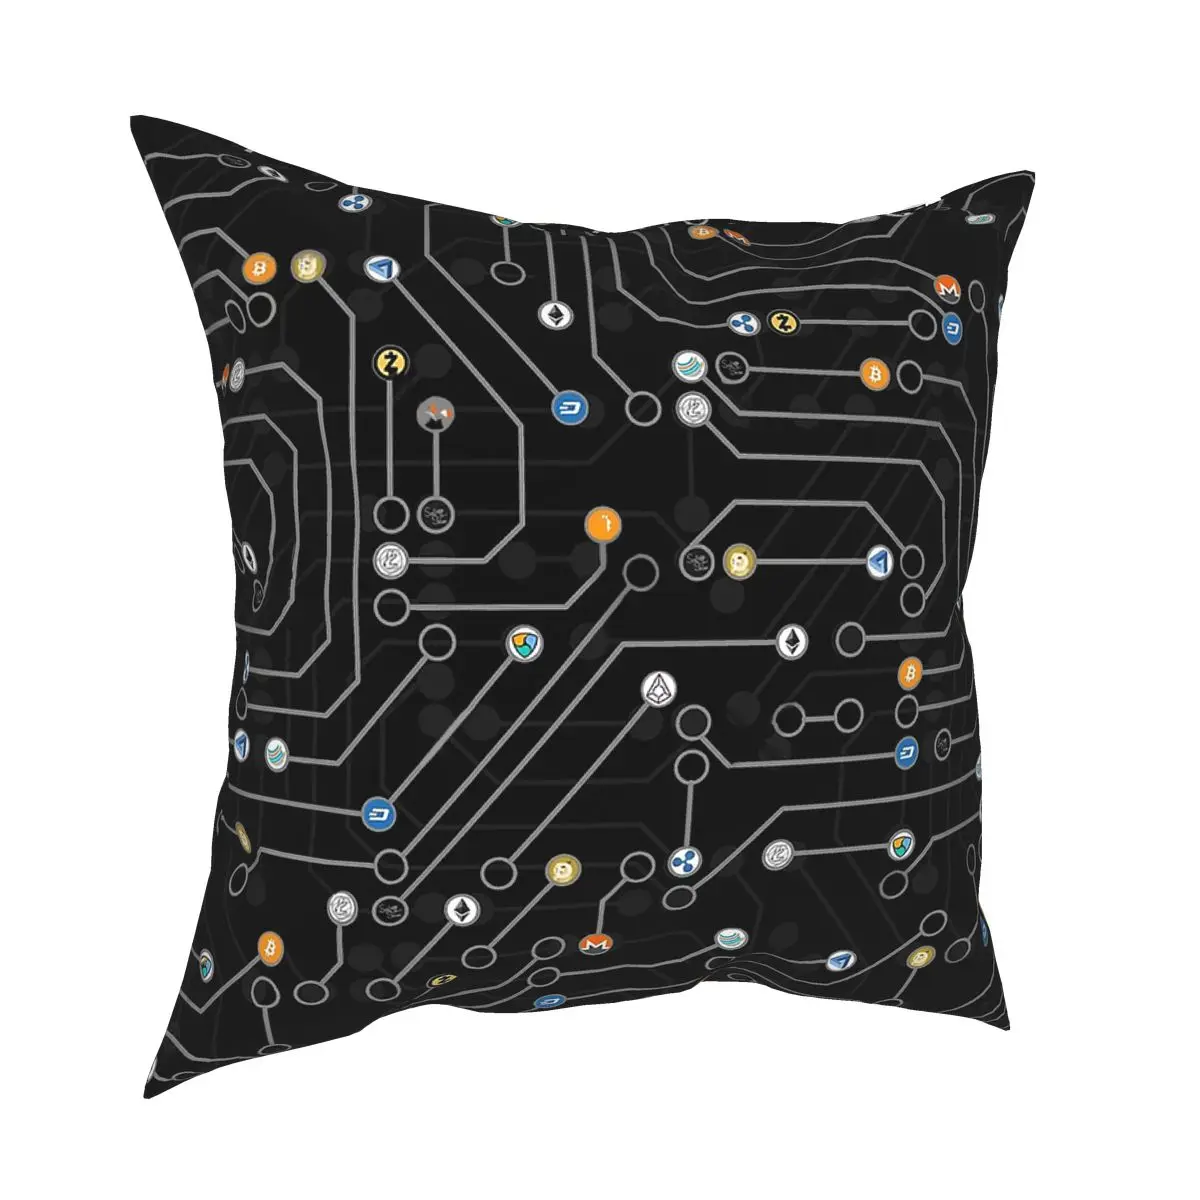 

Digital Asset Throw Pillow Cover Cushions for Sofa Bitcoin Crypto Cryptocurrency Ethereum Btc Blockchain Pillowcover Home Decor